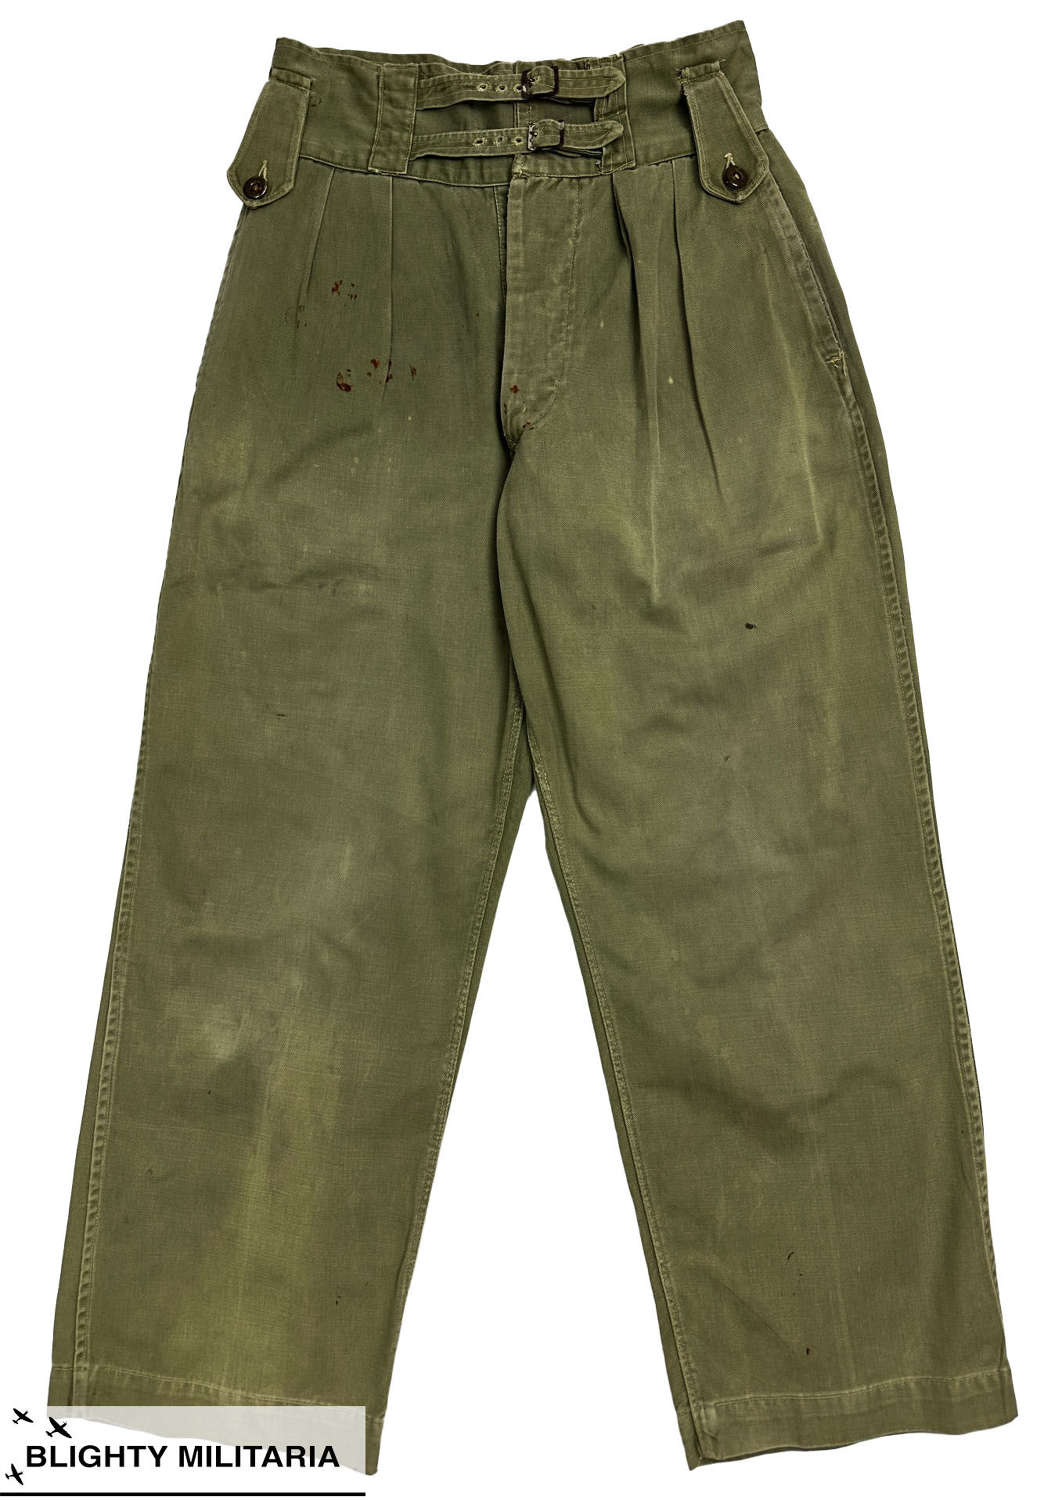 Original 1940s Canadian Jungle Green Trousers - Size 27 x 27